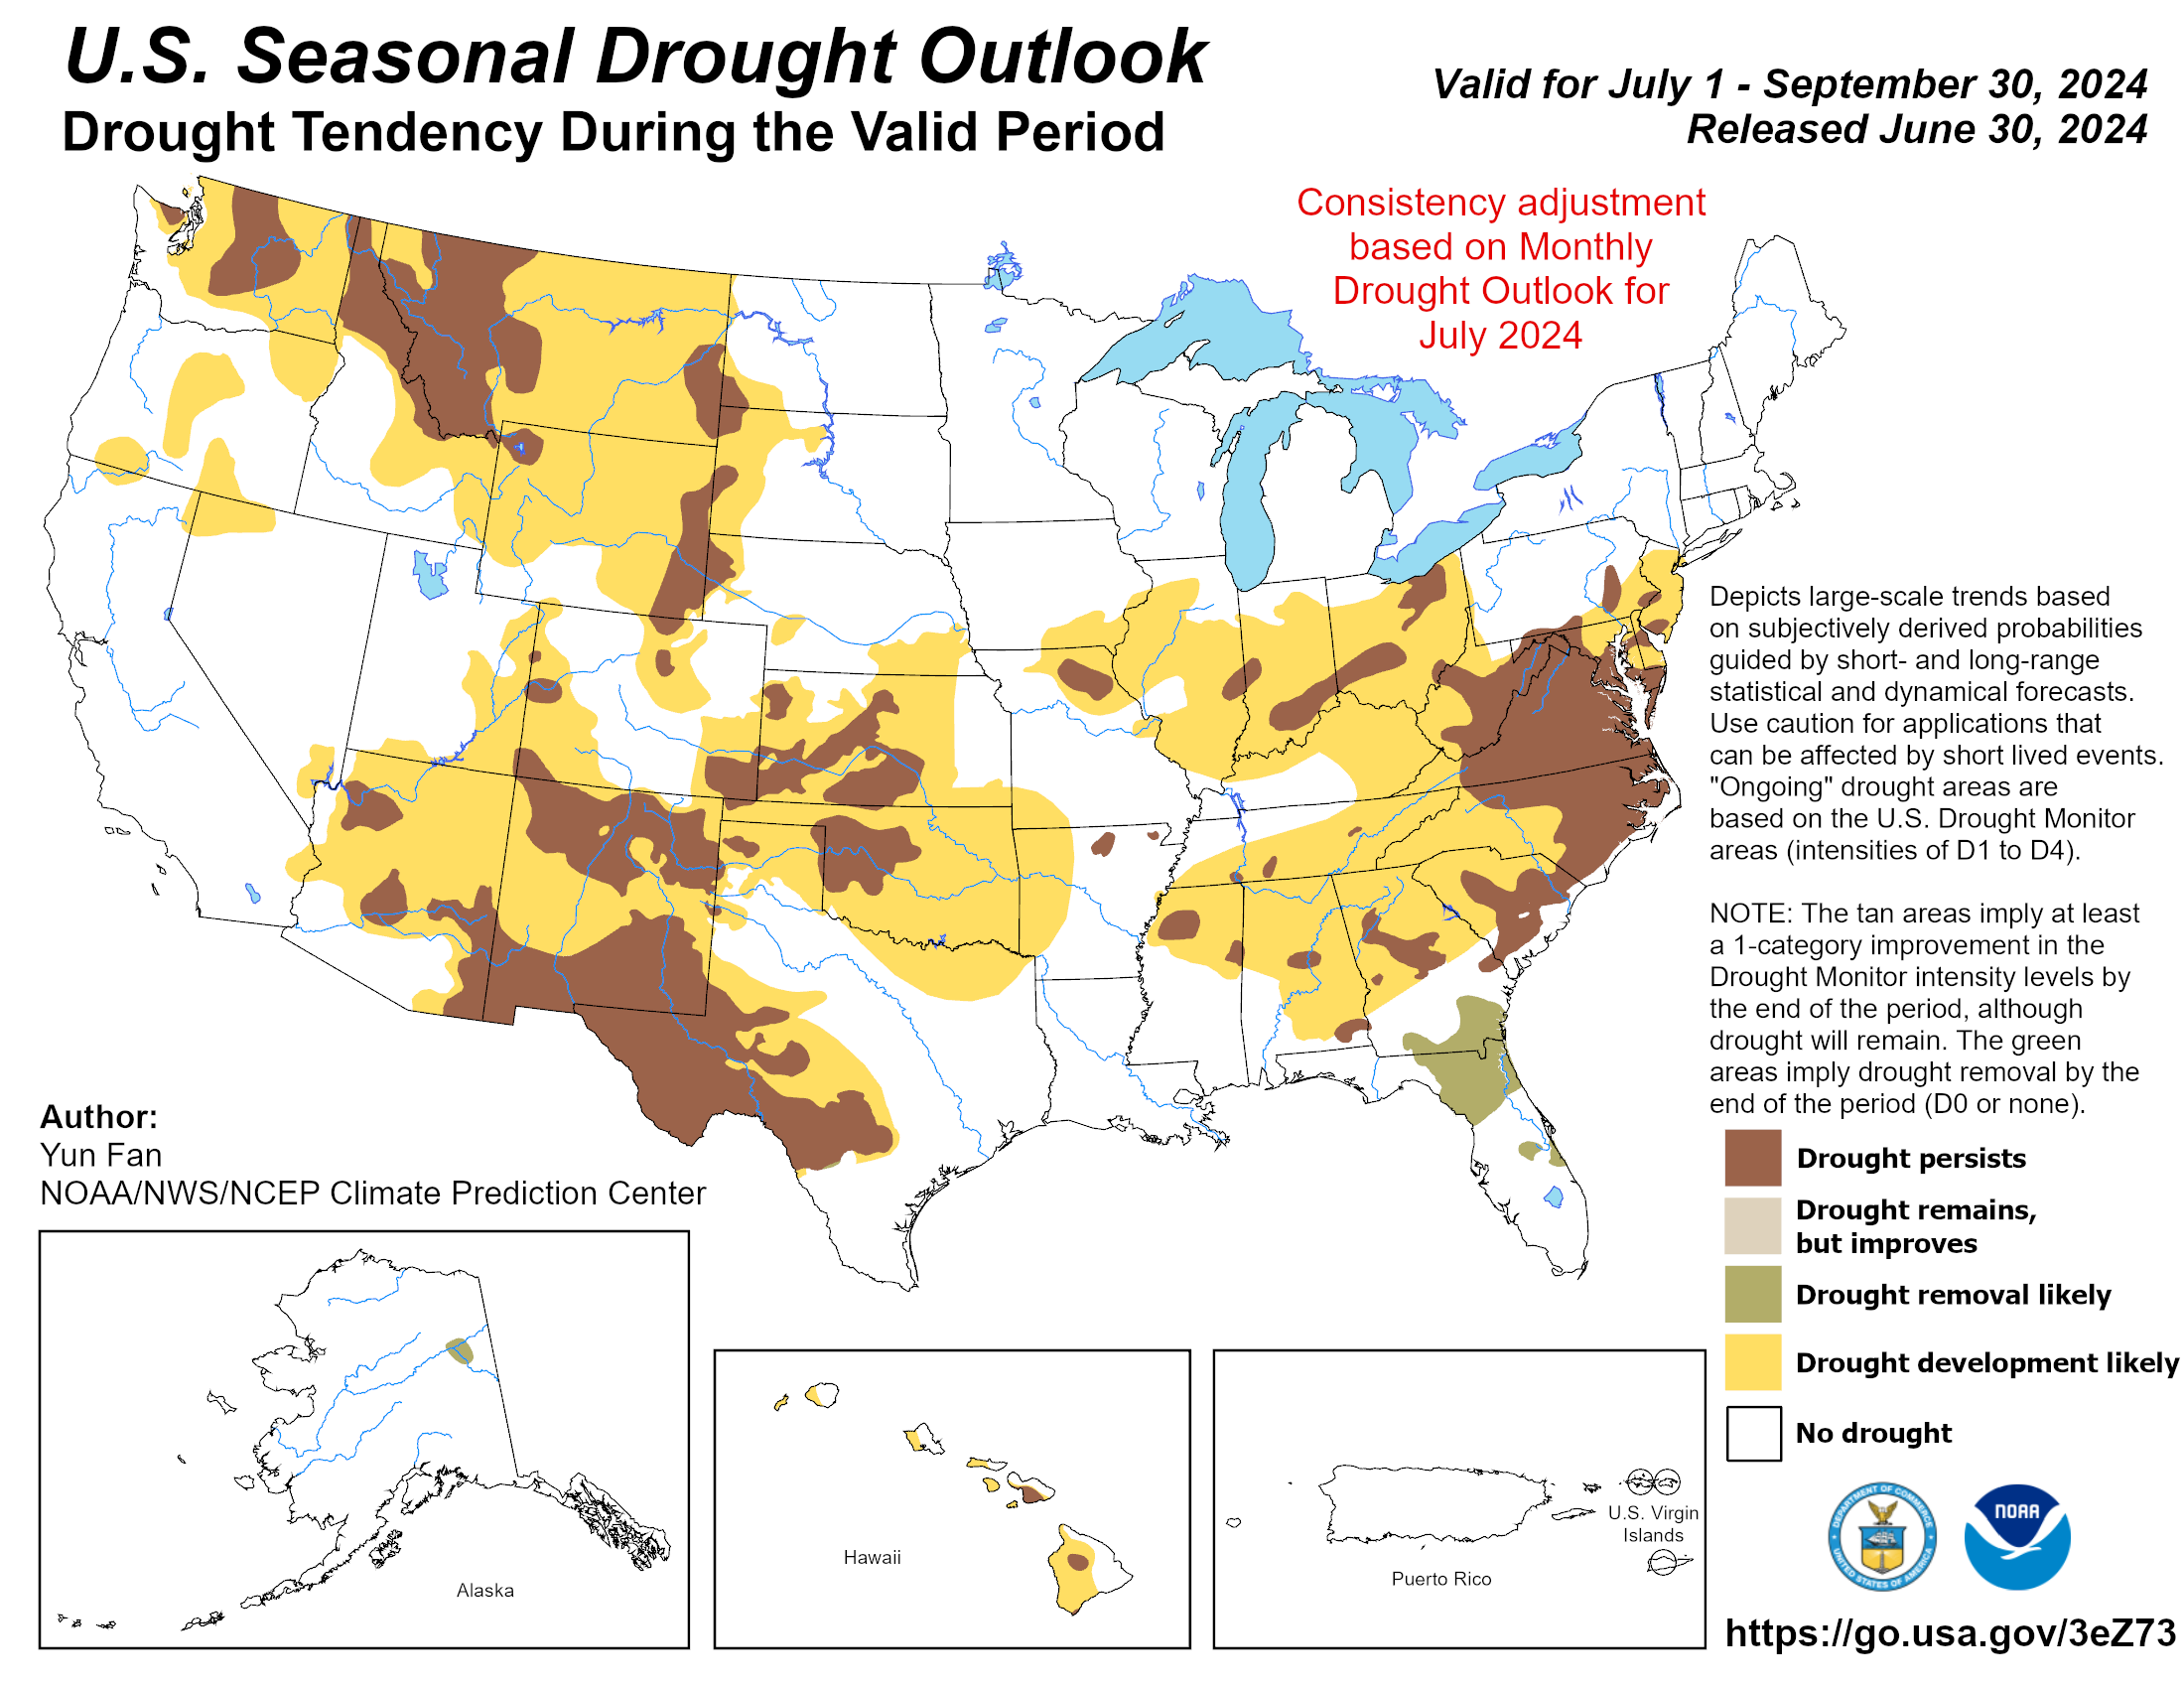 U.S. Seasonal Drought Outlook map